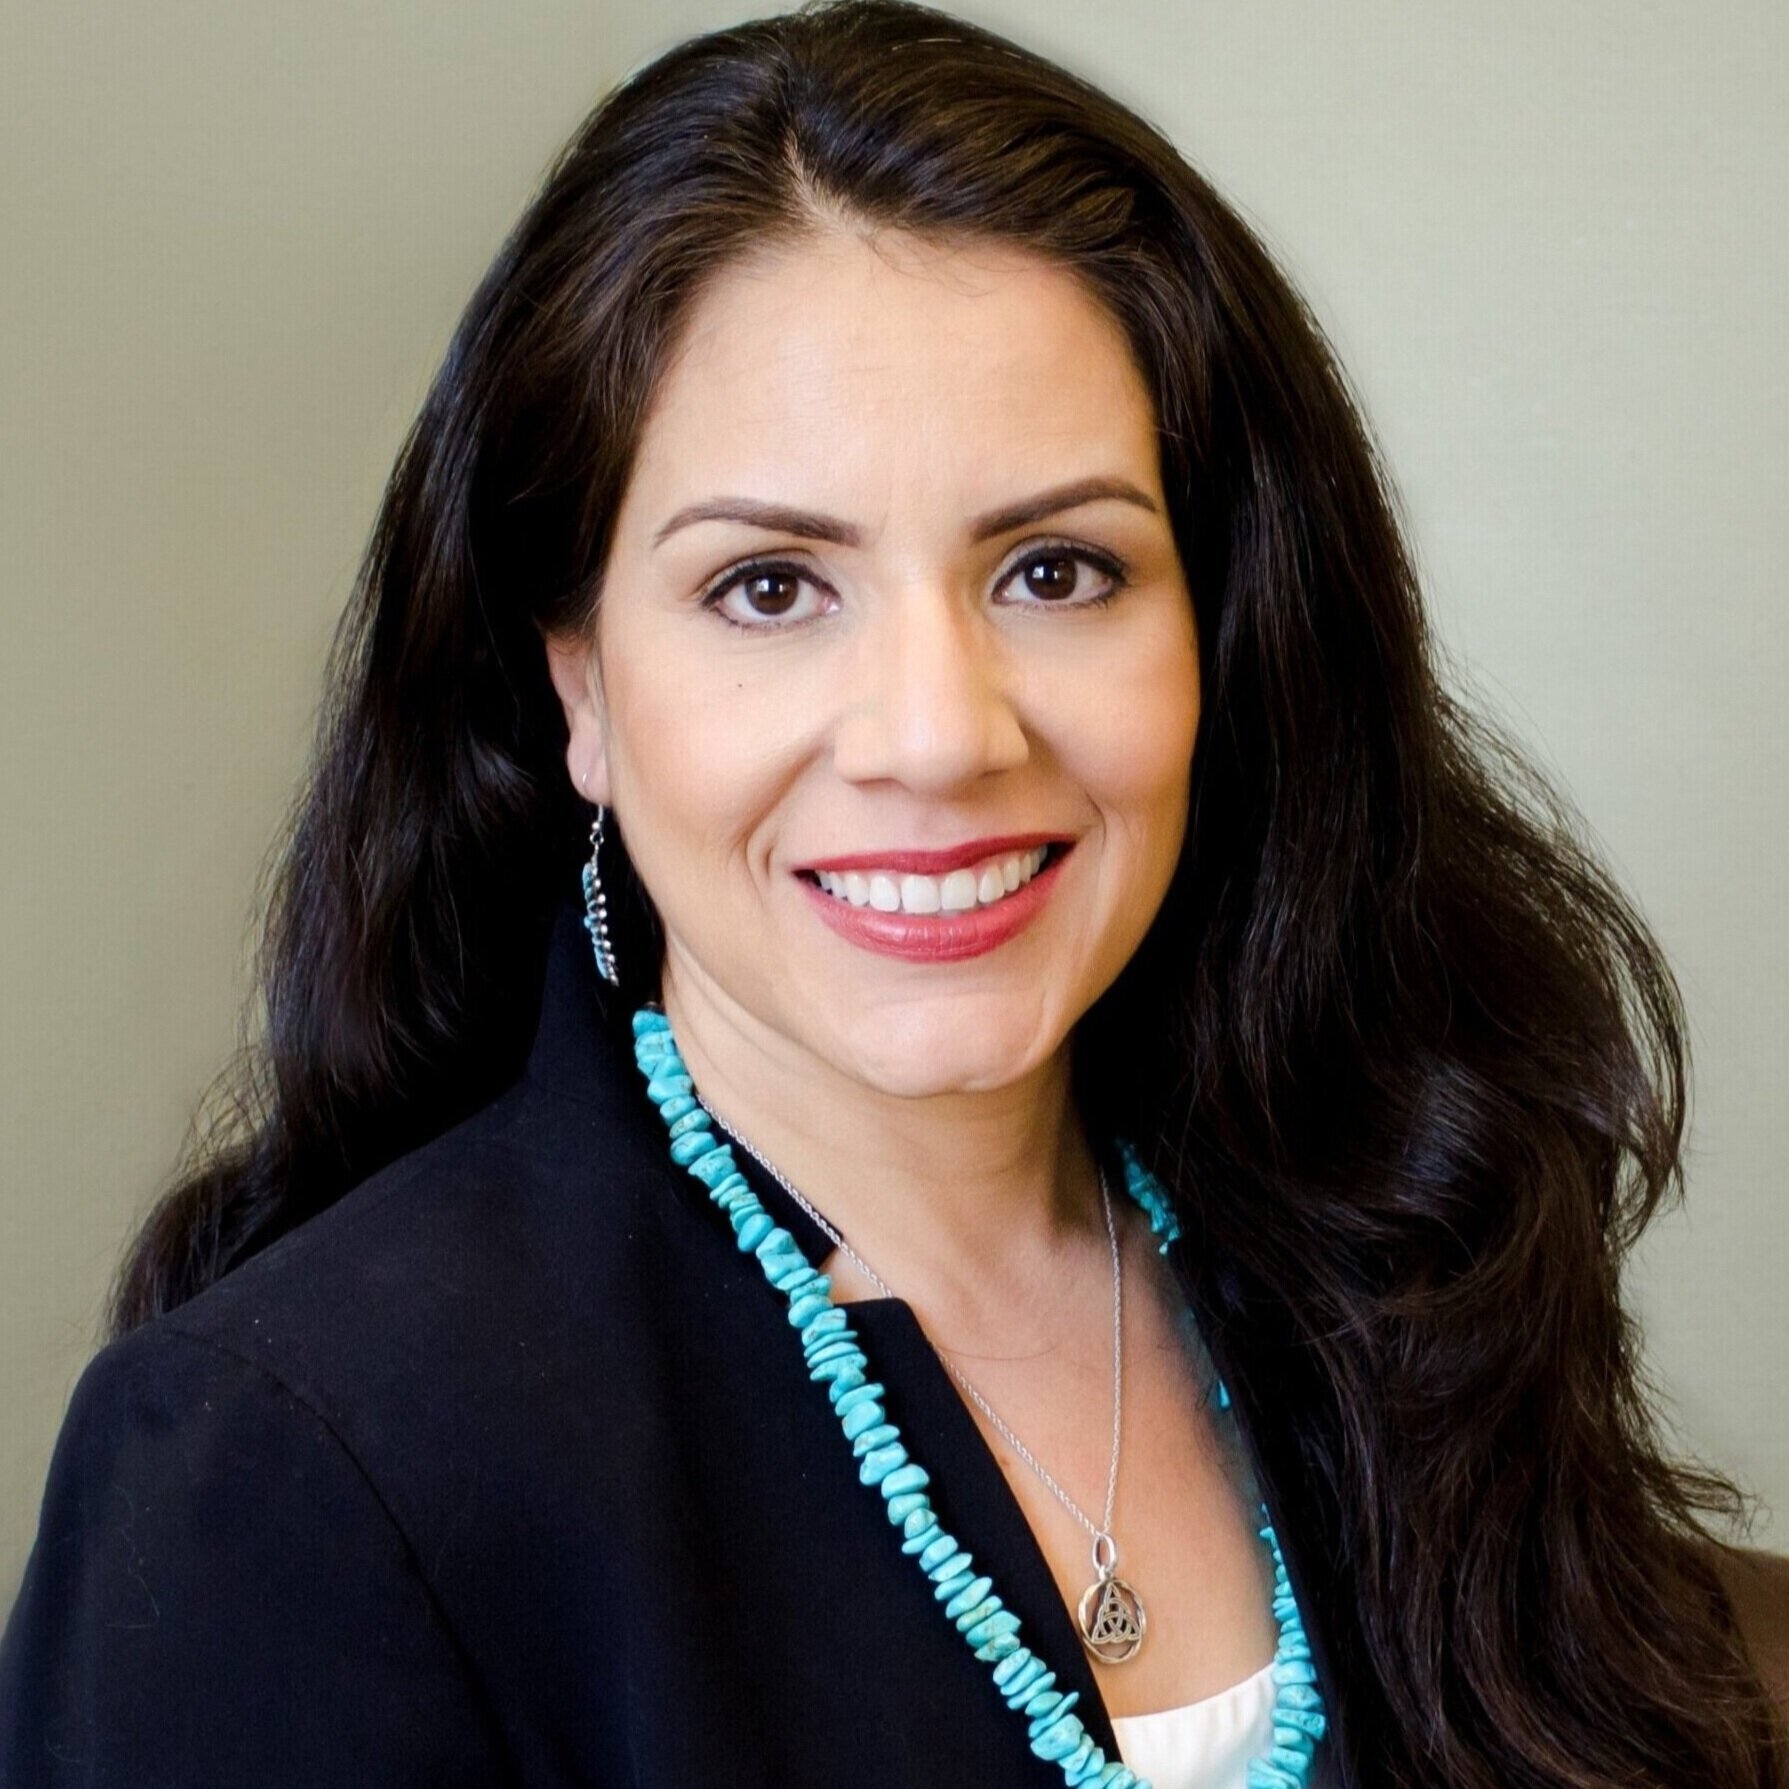 Erica Velarde - A Latina Woman Behind New Mexico's Green Energy